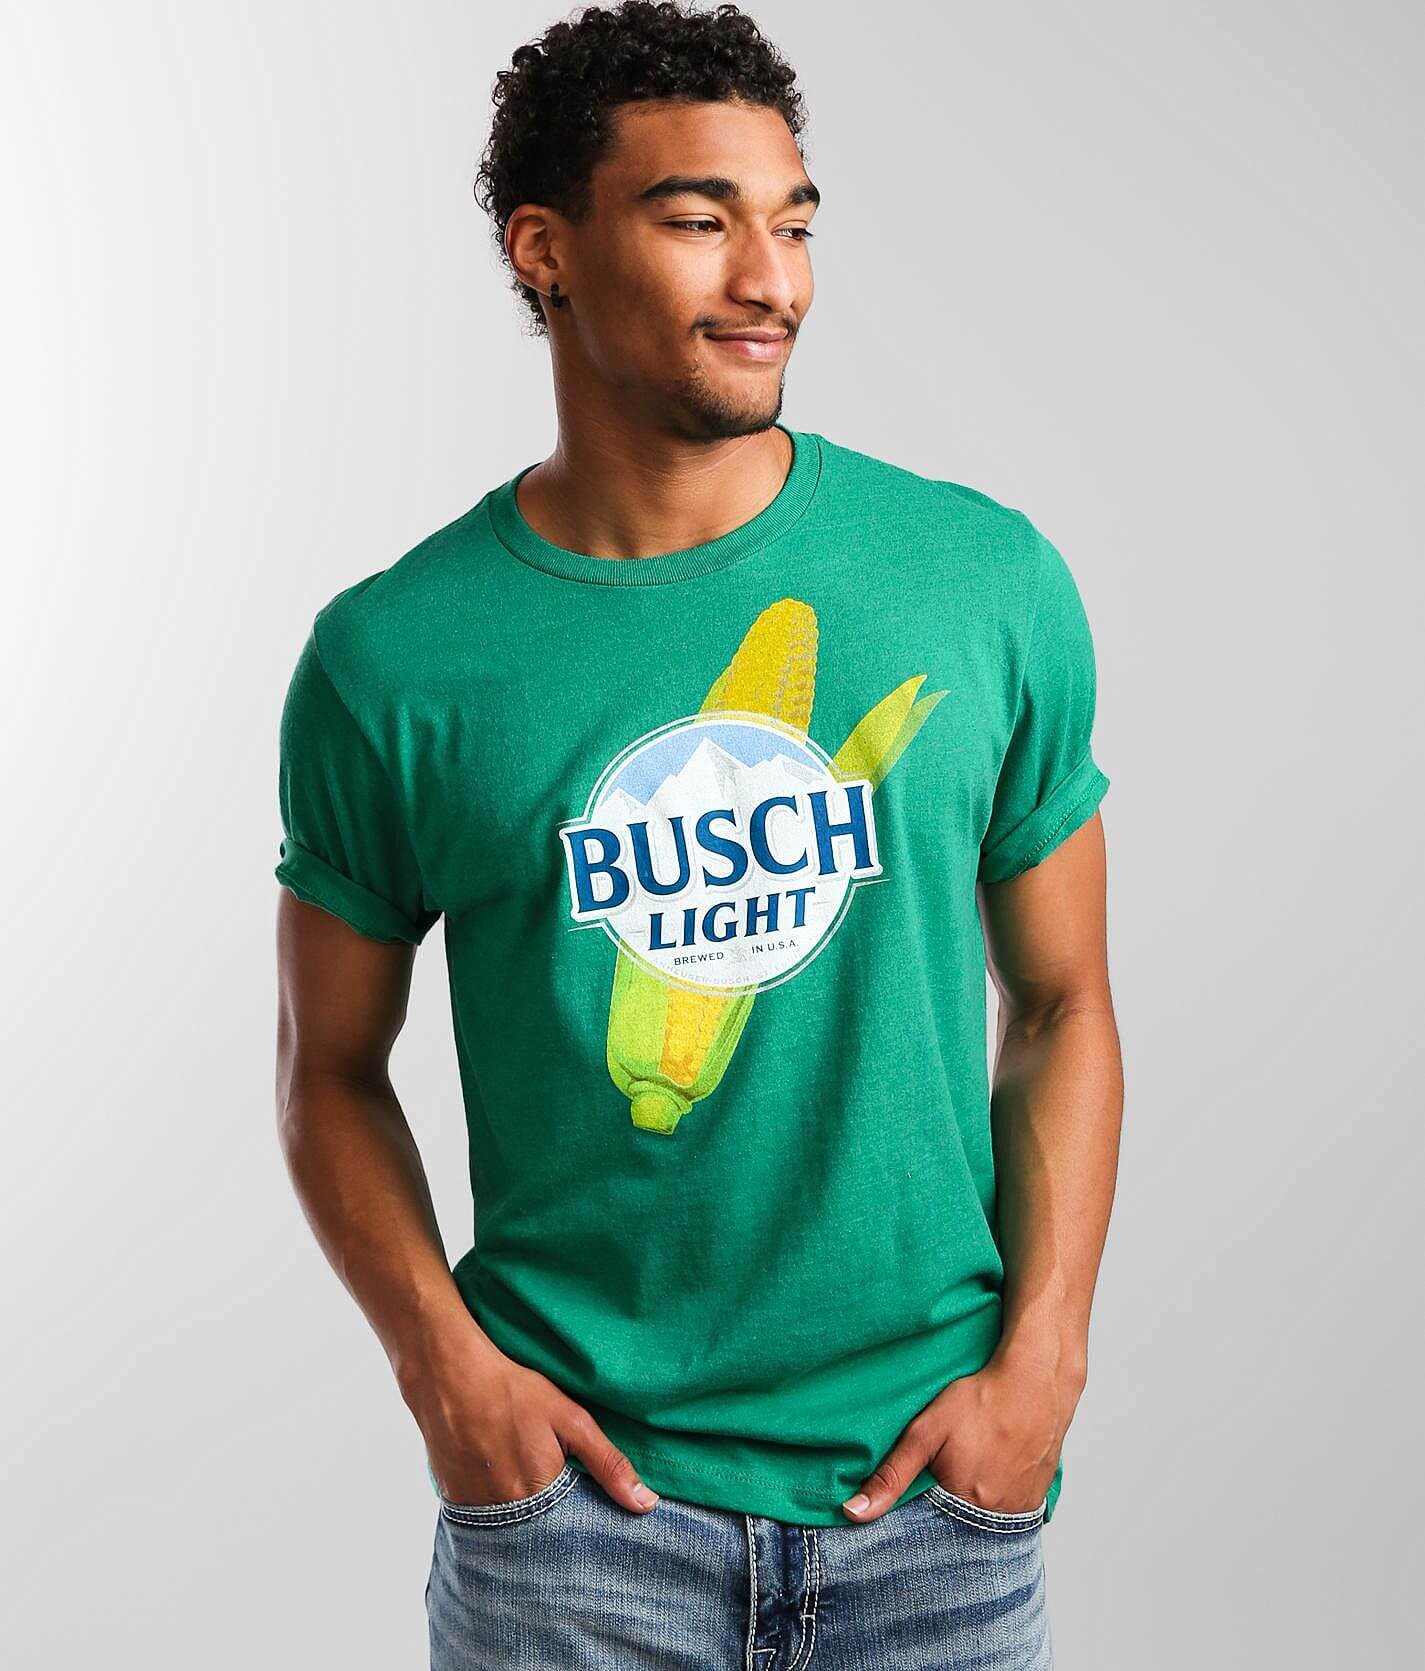 Brew City Busch Light® Fishing T-Shirt - Men's T-Shirts in Heather